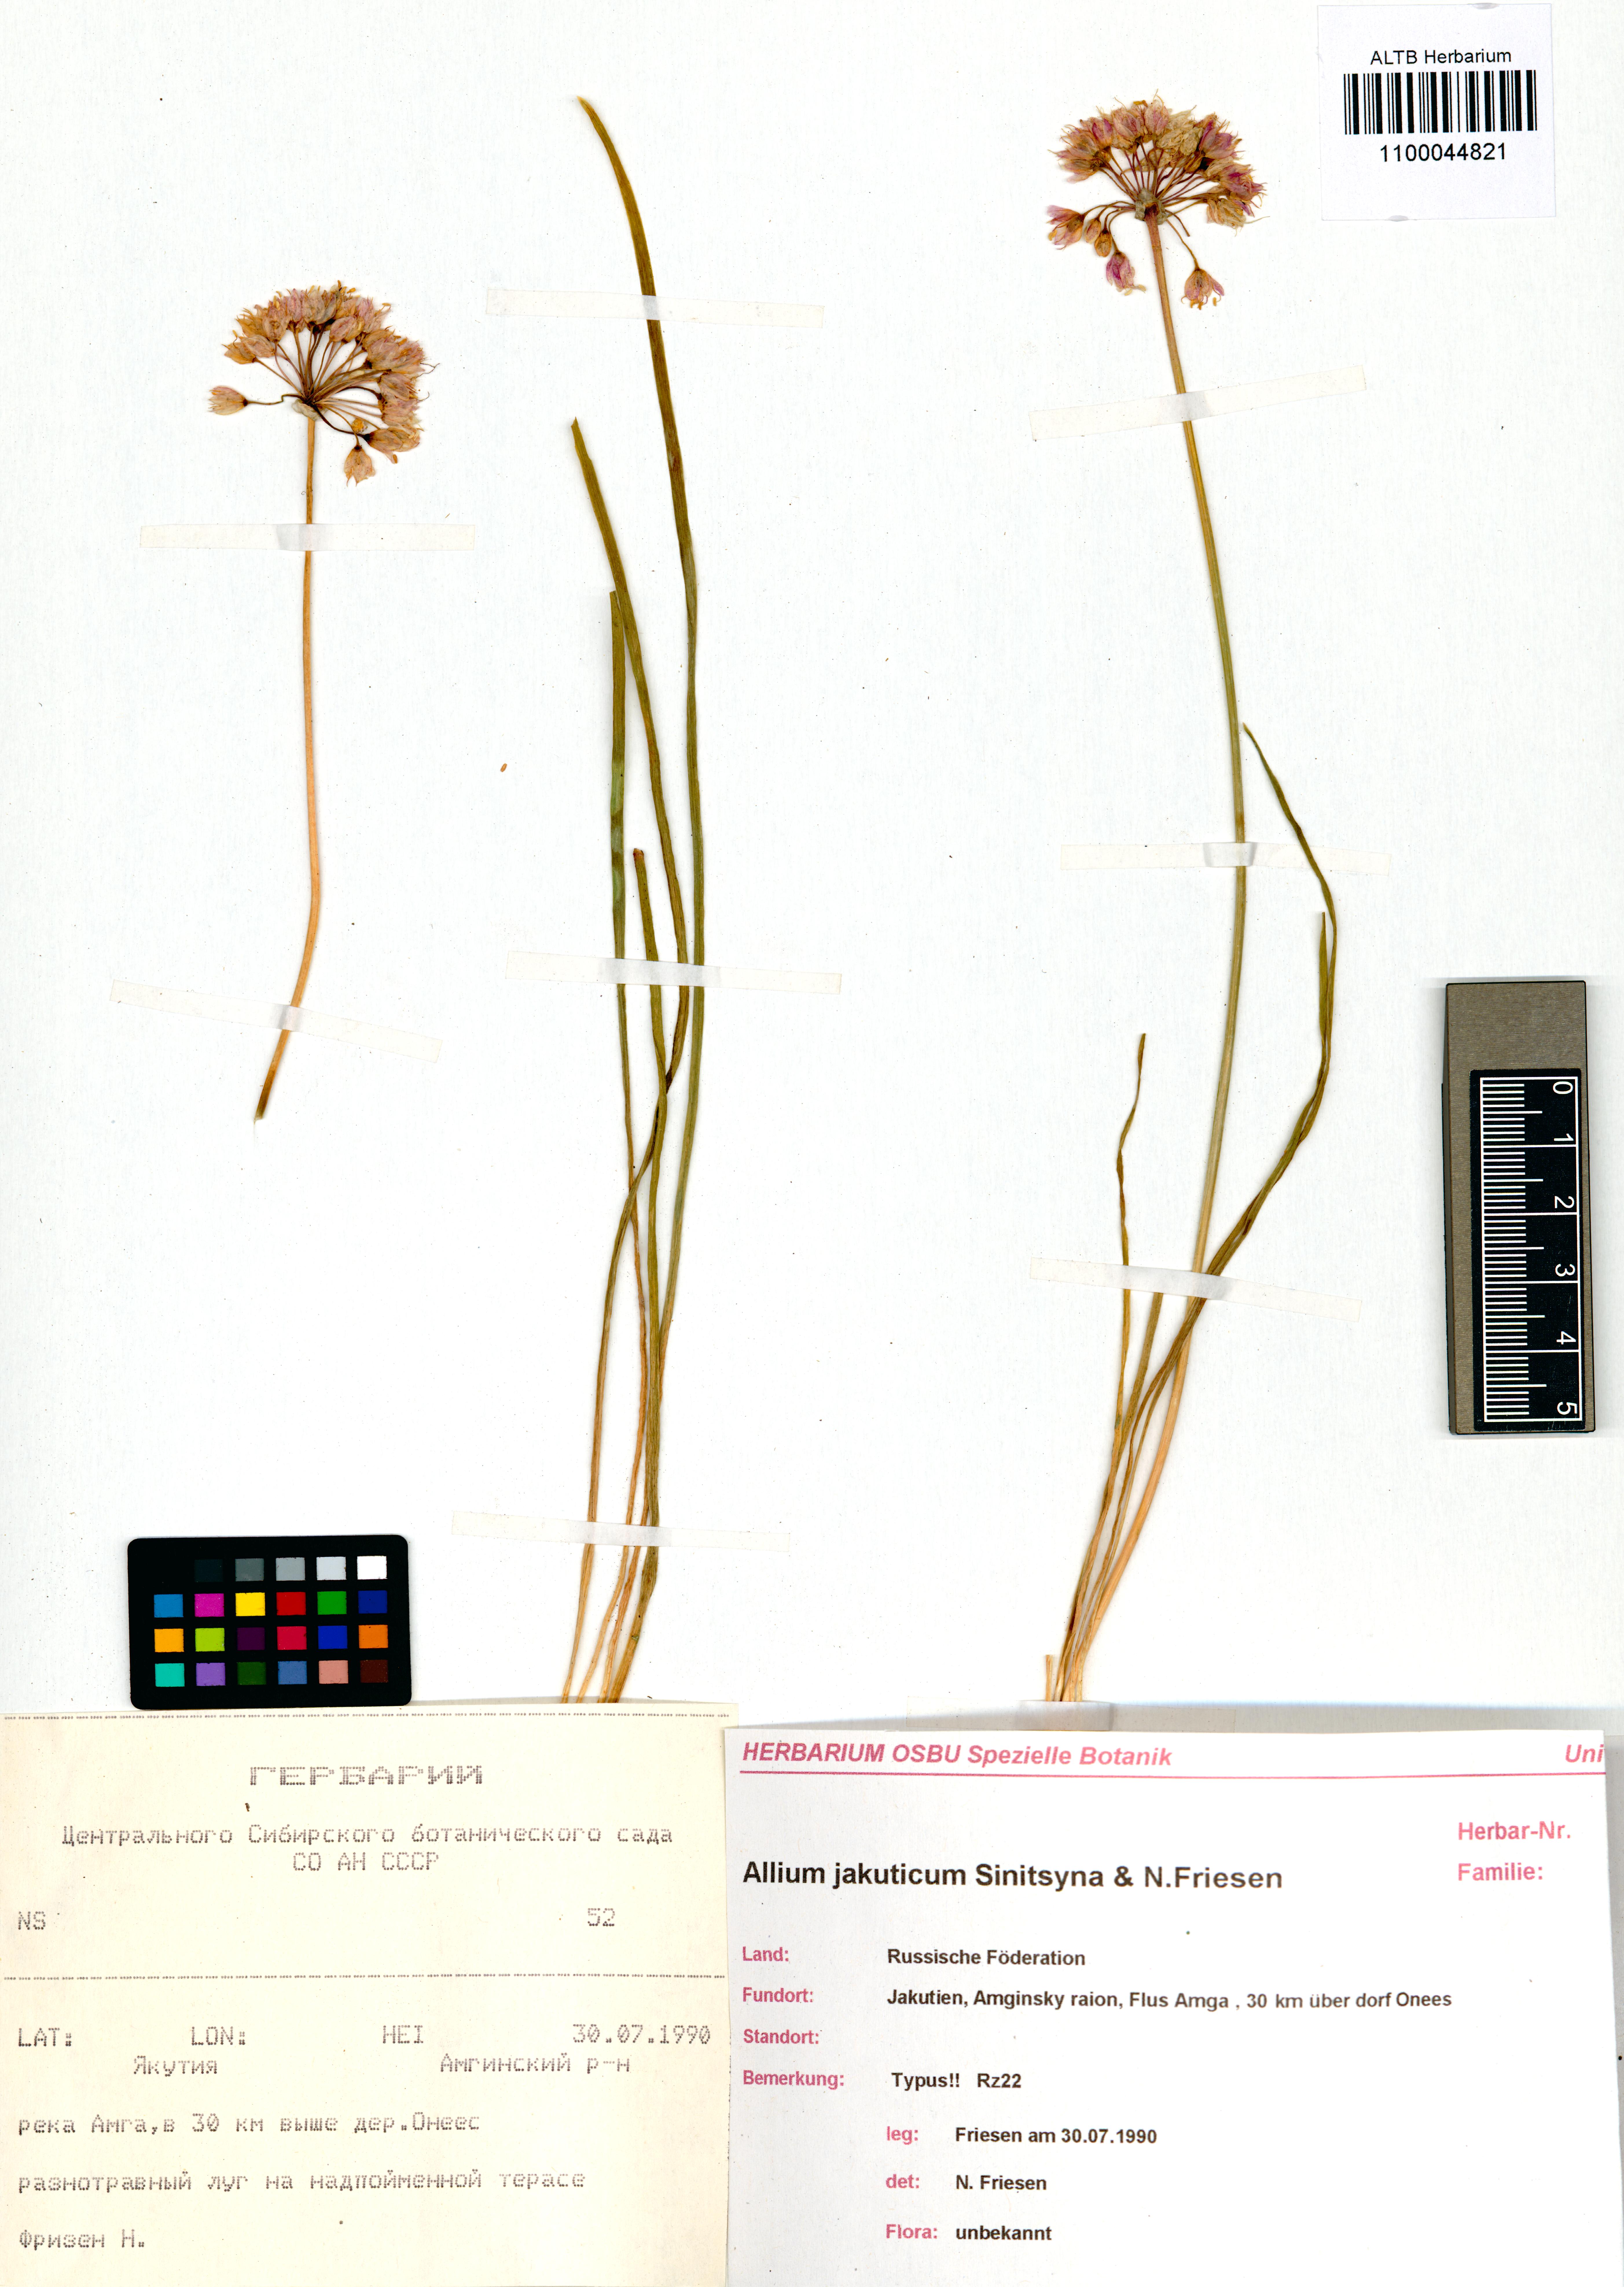 Amaryllidaceae,Allium jakuticum Sinitsyna, N.Friesen